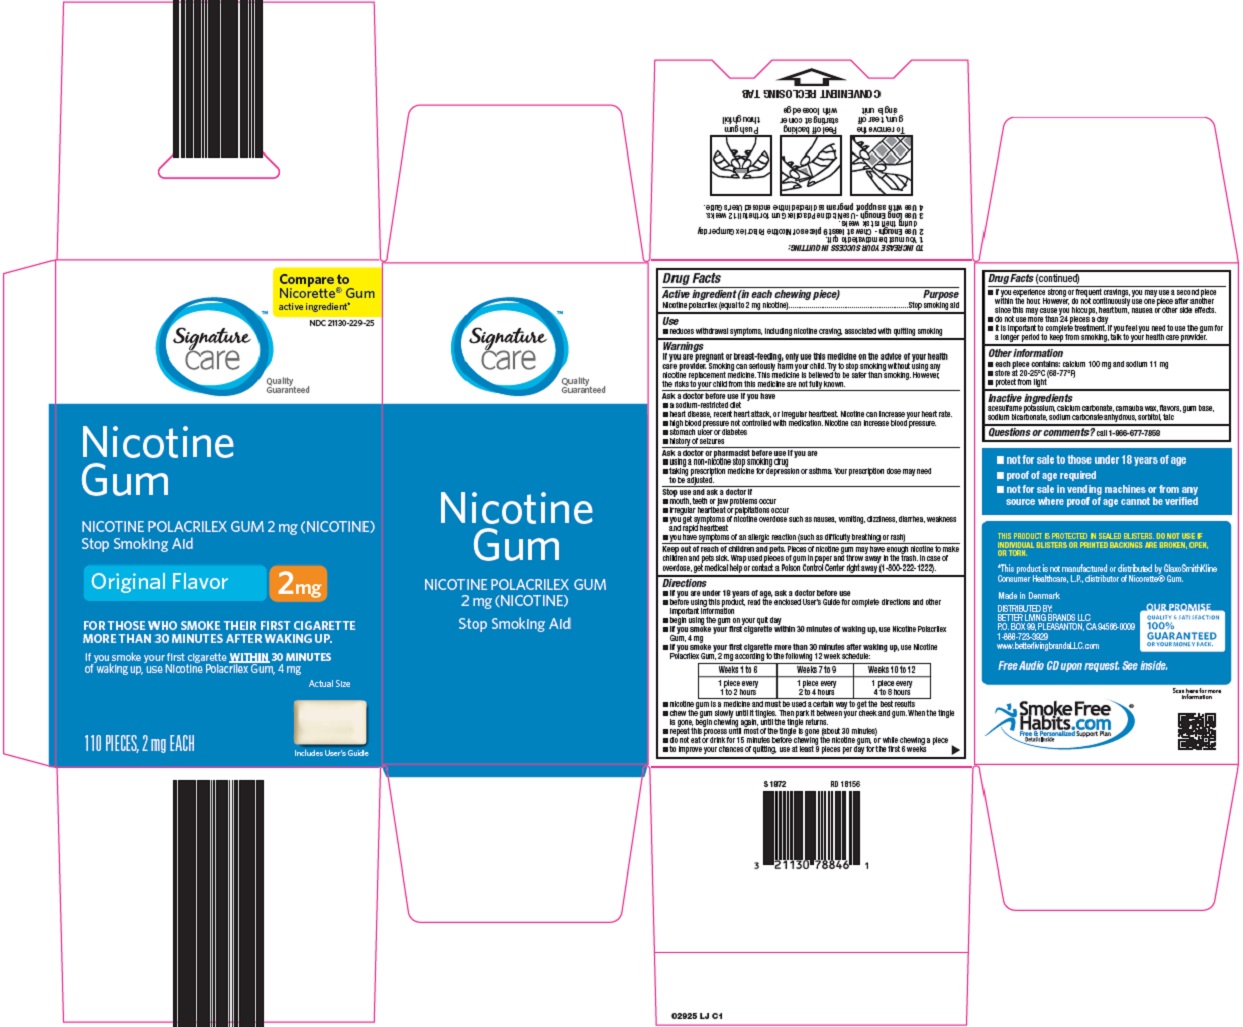 nicotine-gum-image